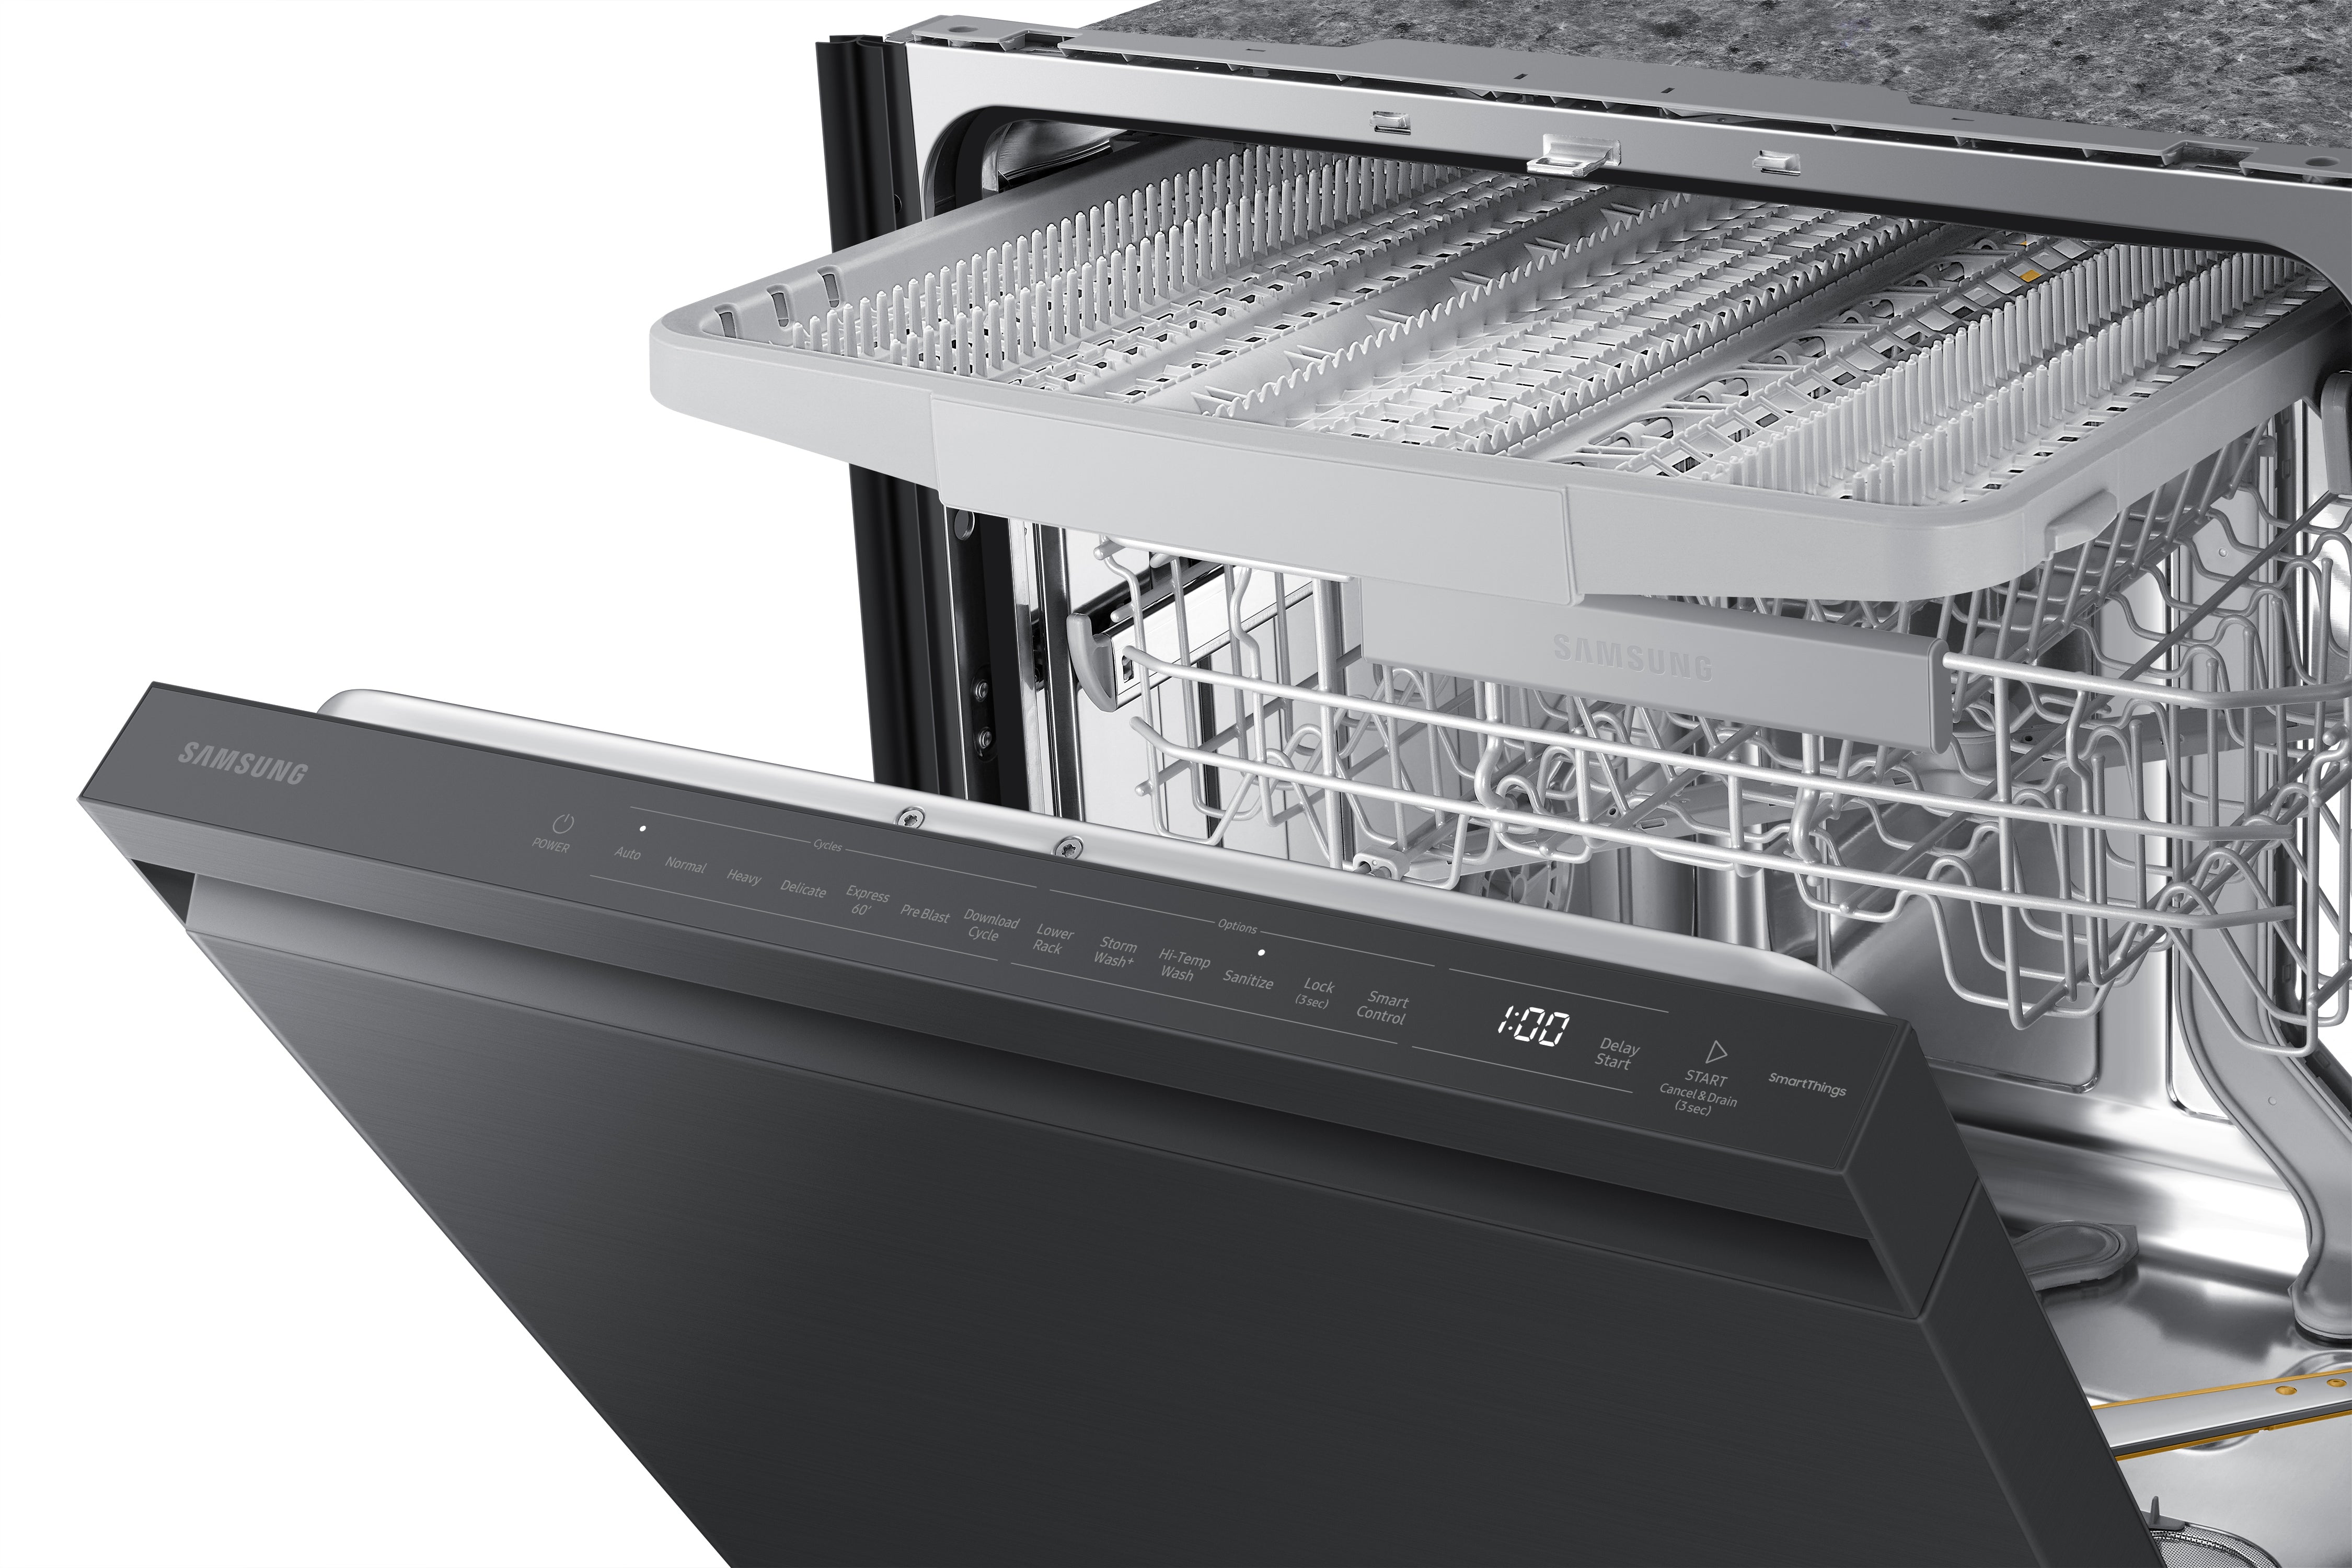 Samsung - 44 dBA Built In Dishwasher in Black Stainless - DW80B6060UG